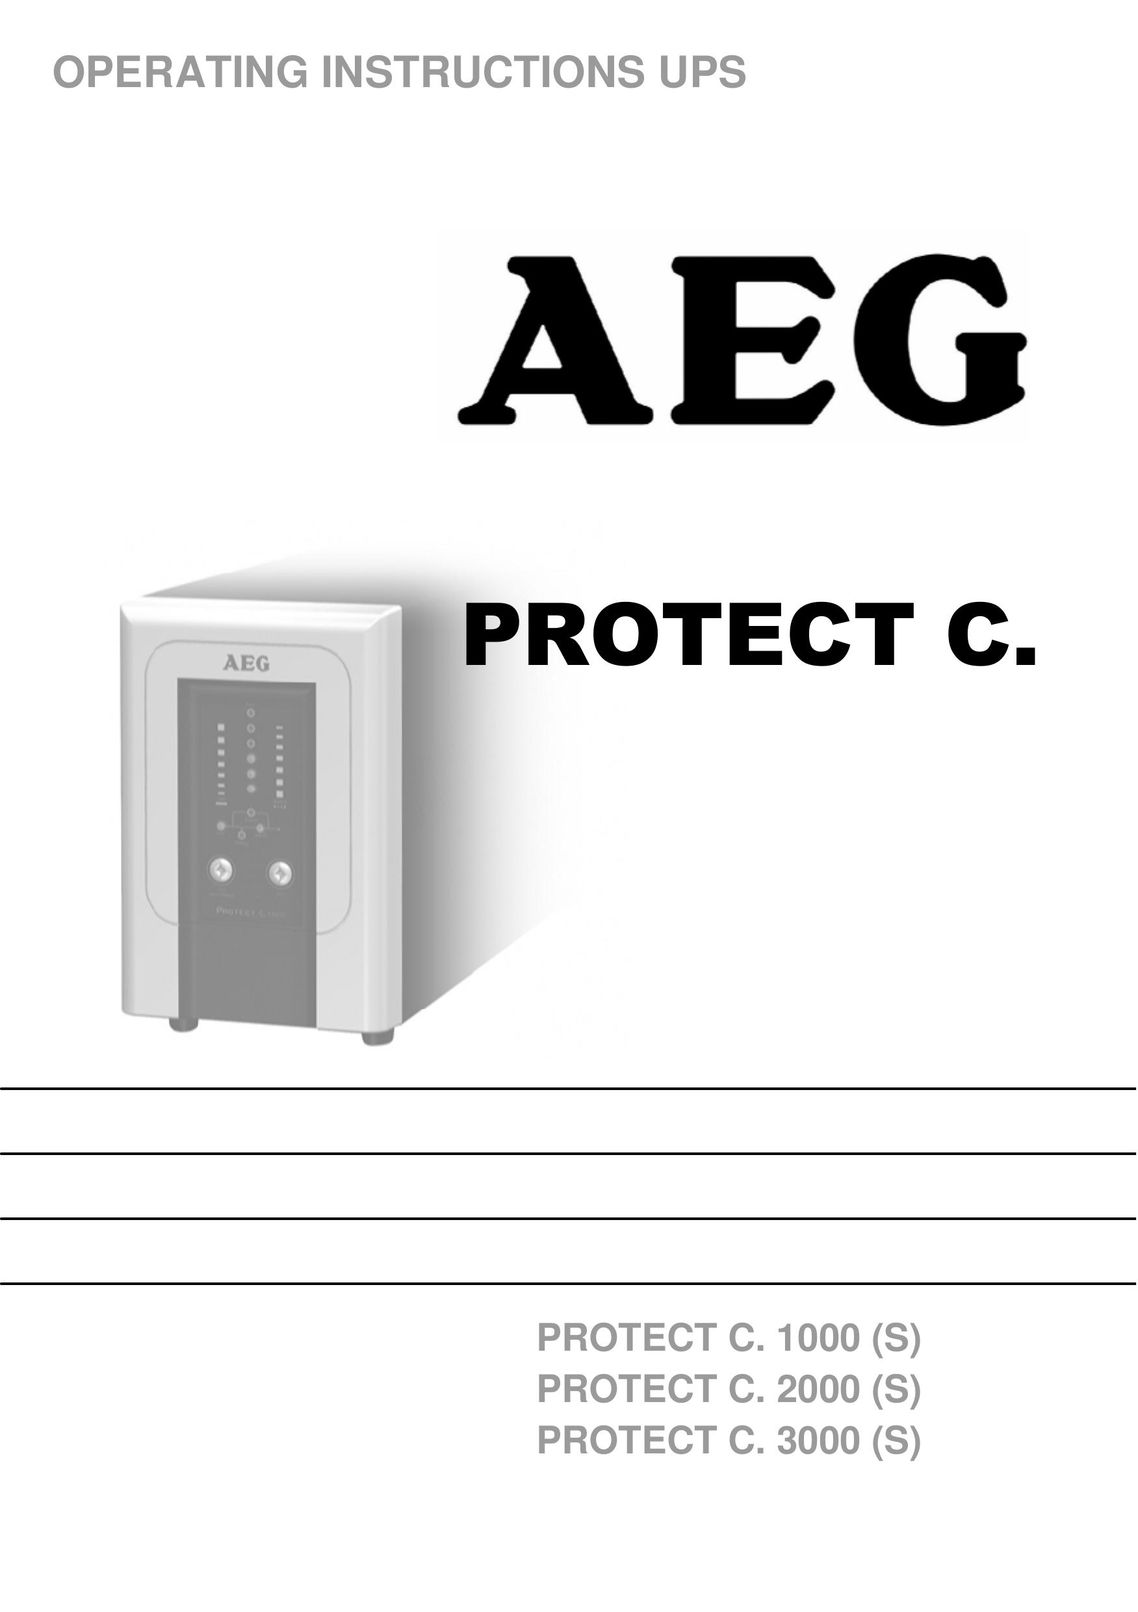 AEG PROTECT C. 1000 (S) Power Supply User Manual